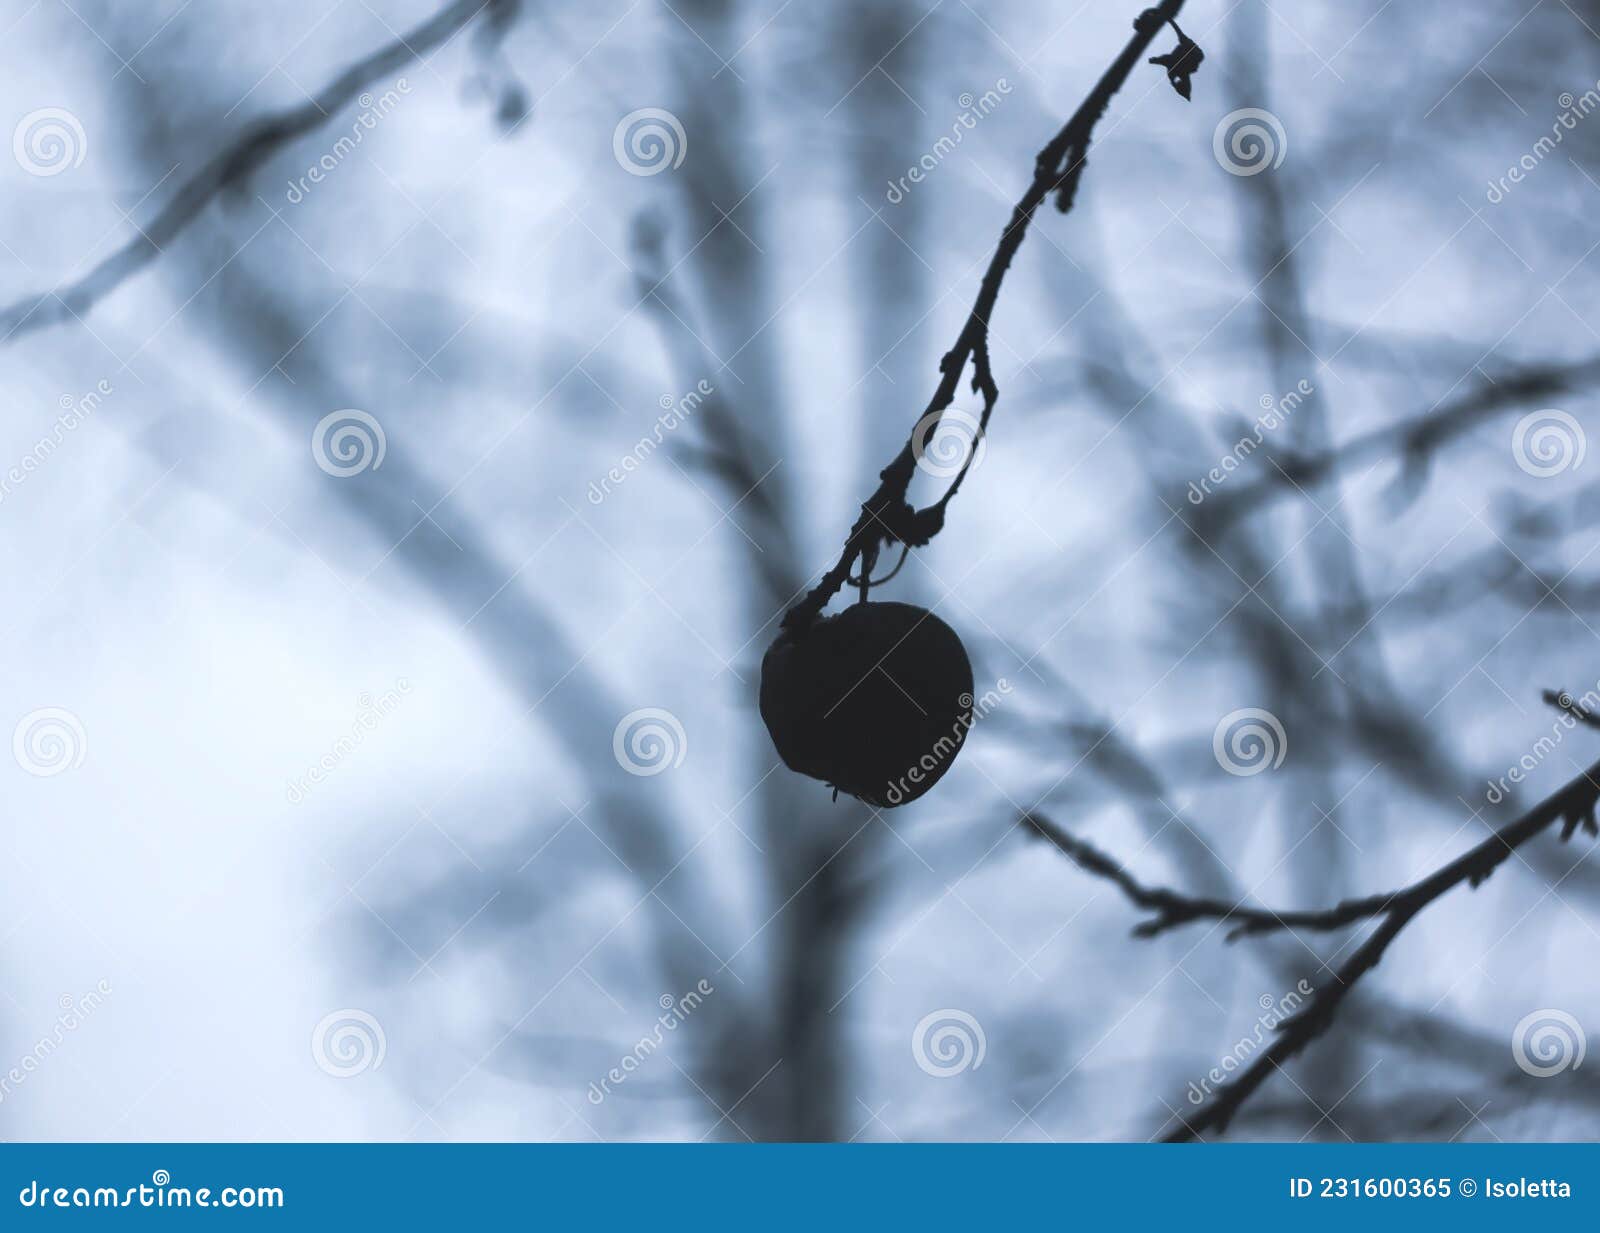 dry apple on bare tree branch